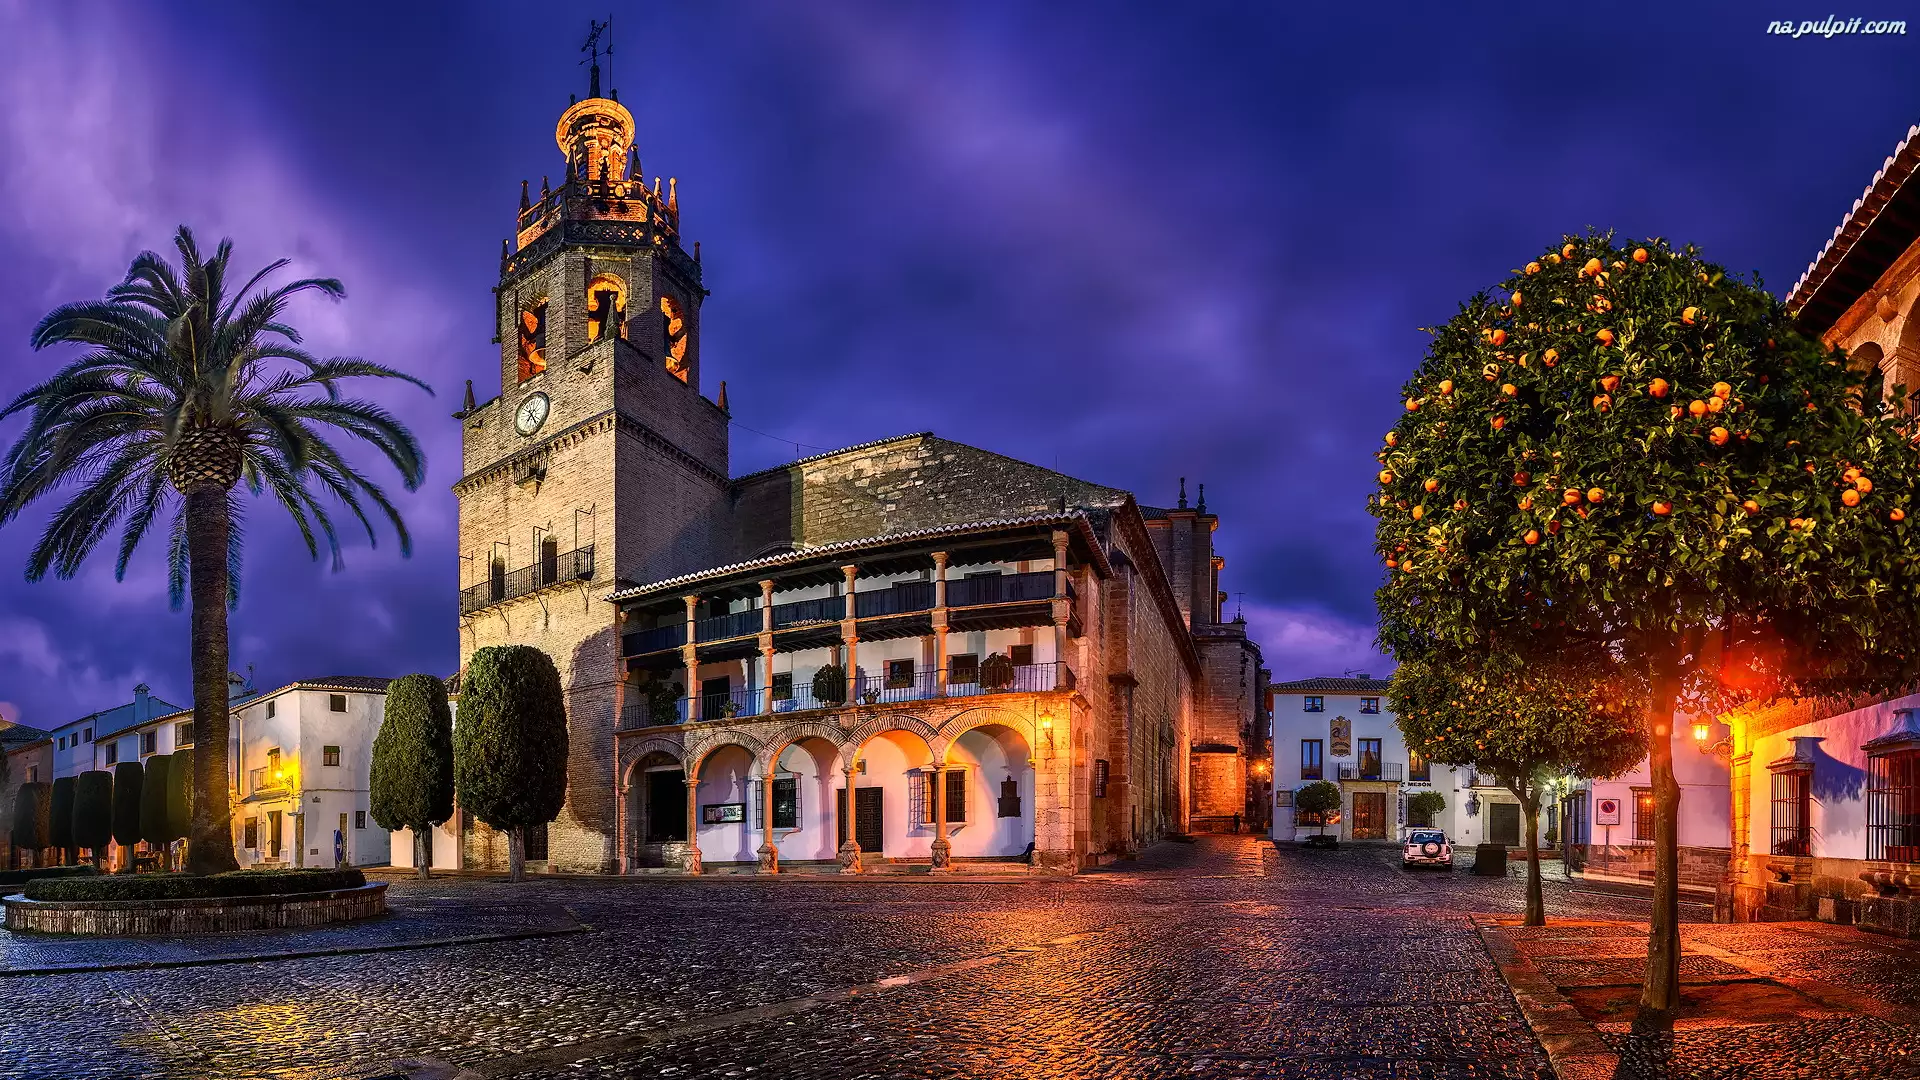 Ronda, Kościół, Drzewo, Prowincja Malaga, Church Santa Maria la Mayor, Droga, Hiszpania, Palma